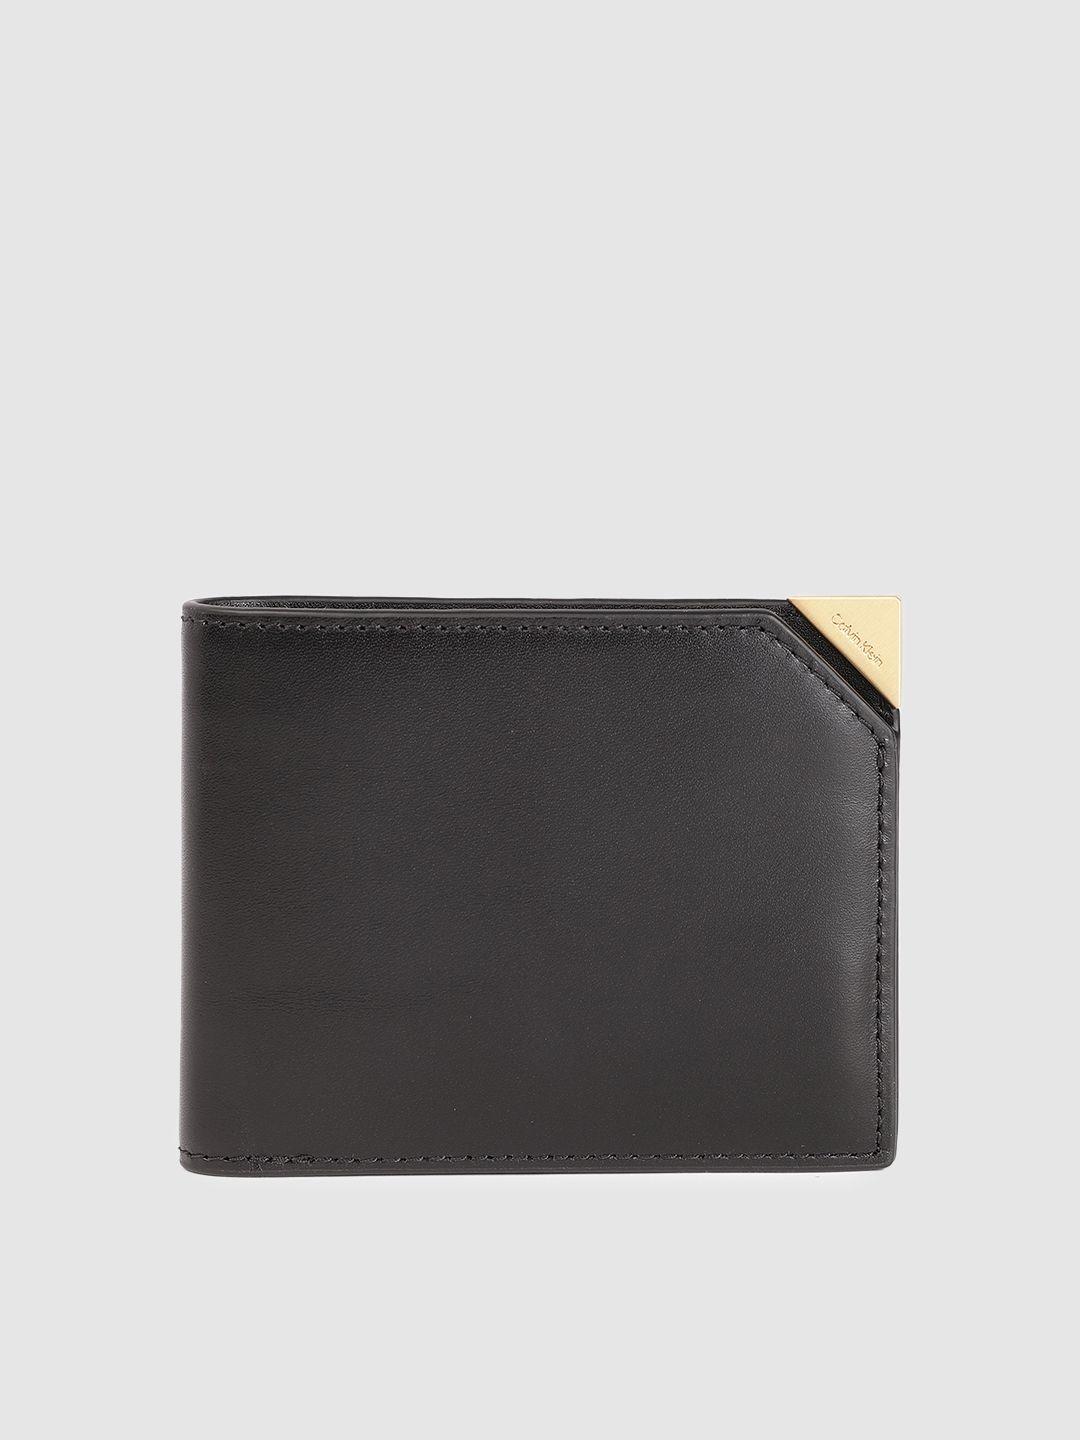 calvin klein men leather two fold wallet